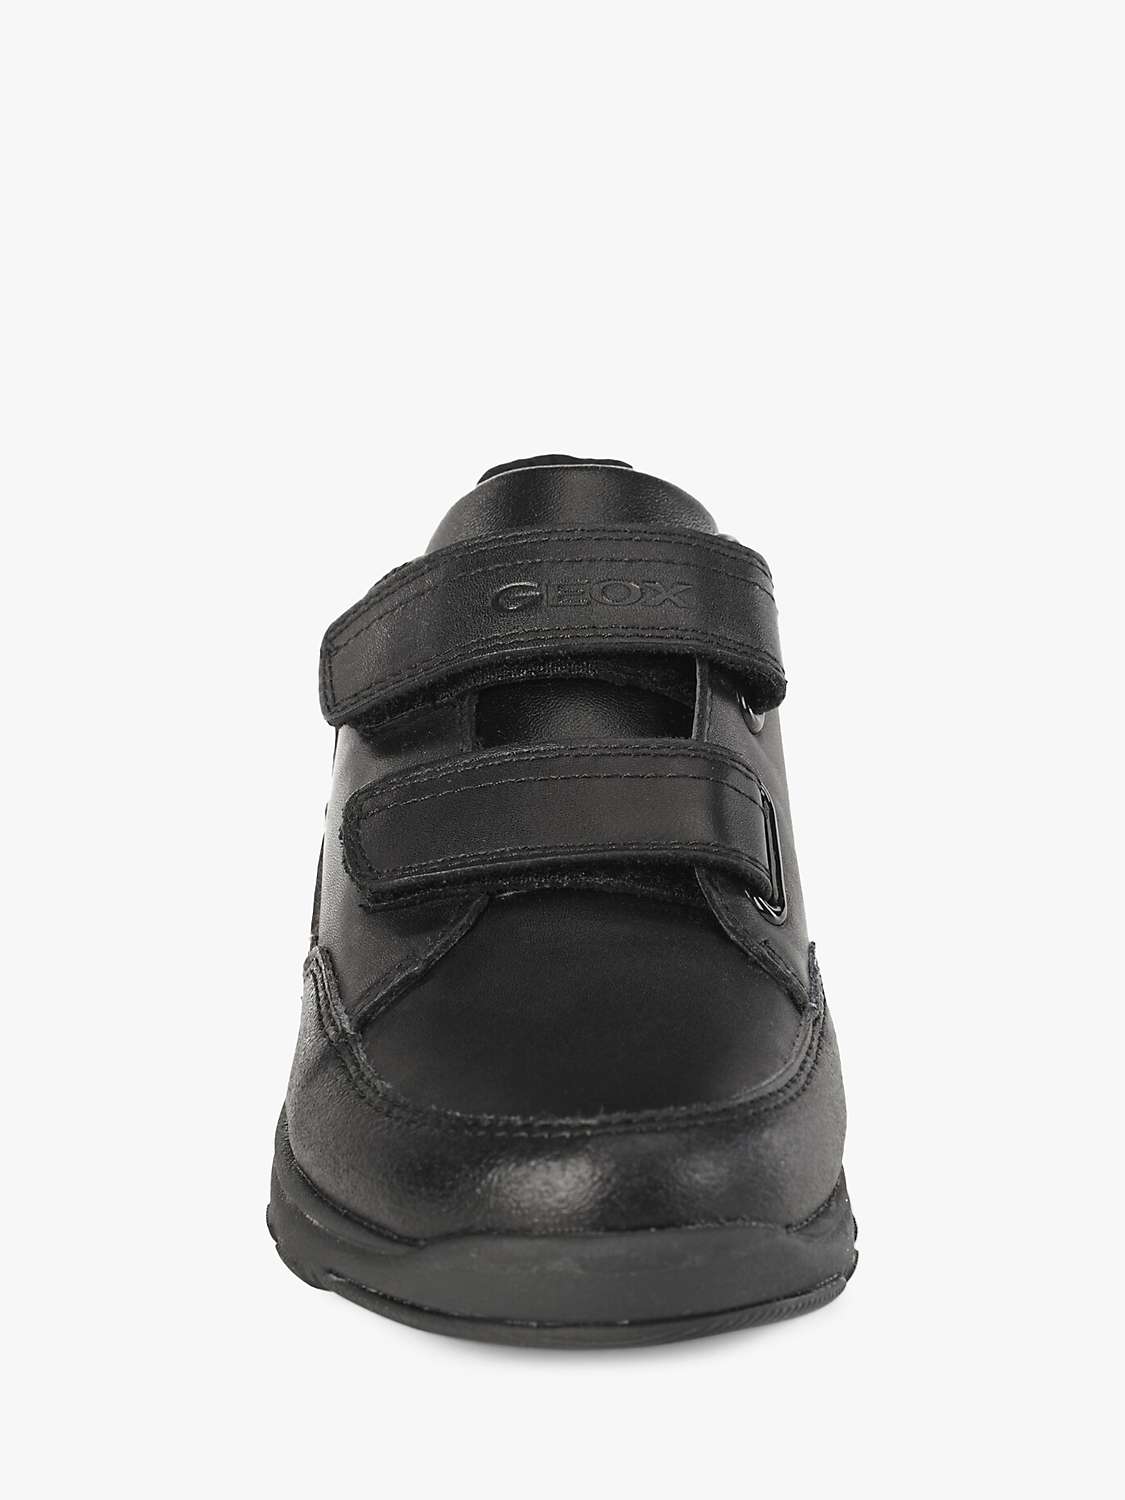 Buy Geox Children's Xunday Shoes, Black Online at johnlewis.com